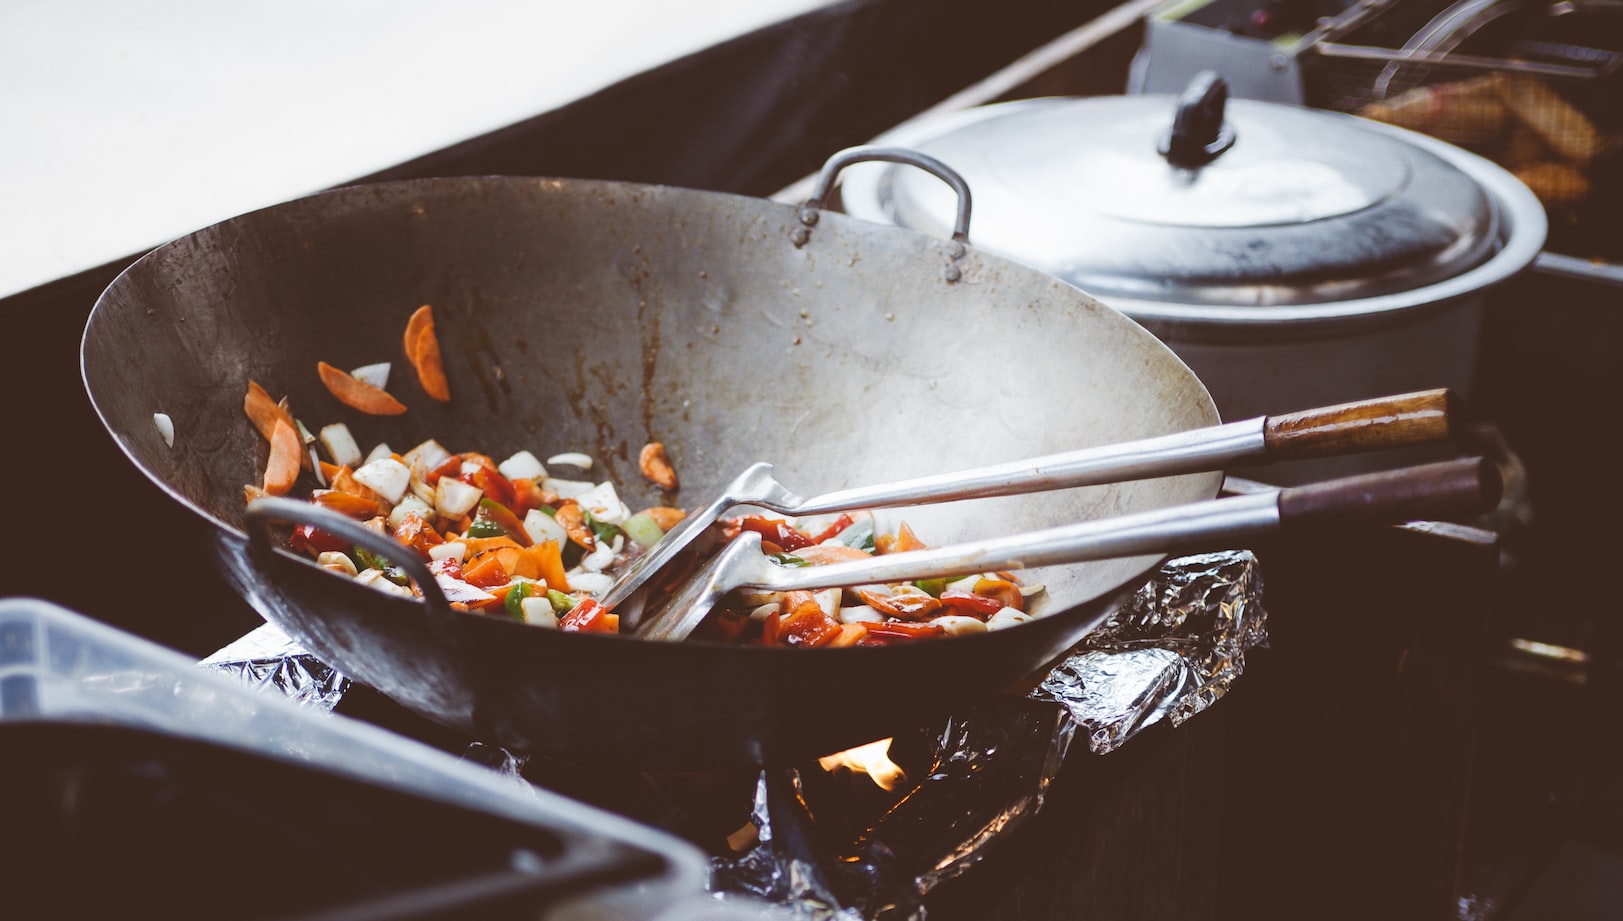 vegetable stir-fry - healthy dinner ideas